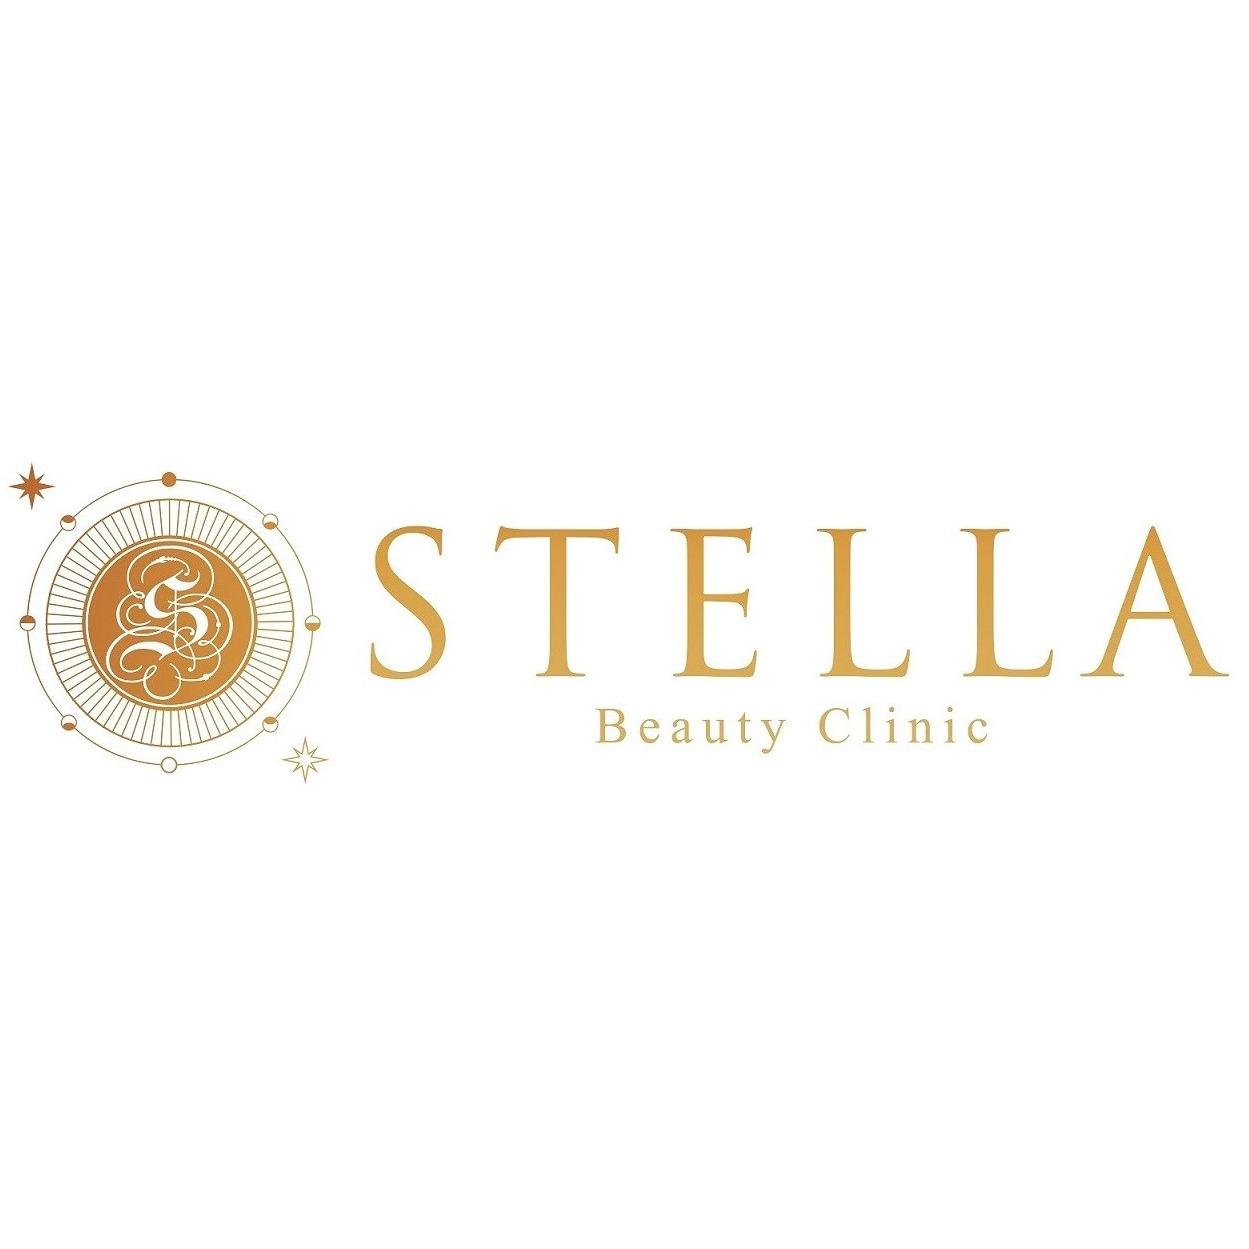 Stella Beauty Clinic(ステラビューティークリニック) - Skin Care Clinic - 新宿区 - 03-6258-1898 Japan | ShowMeLocal.com